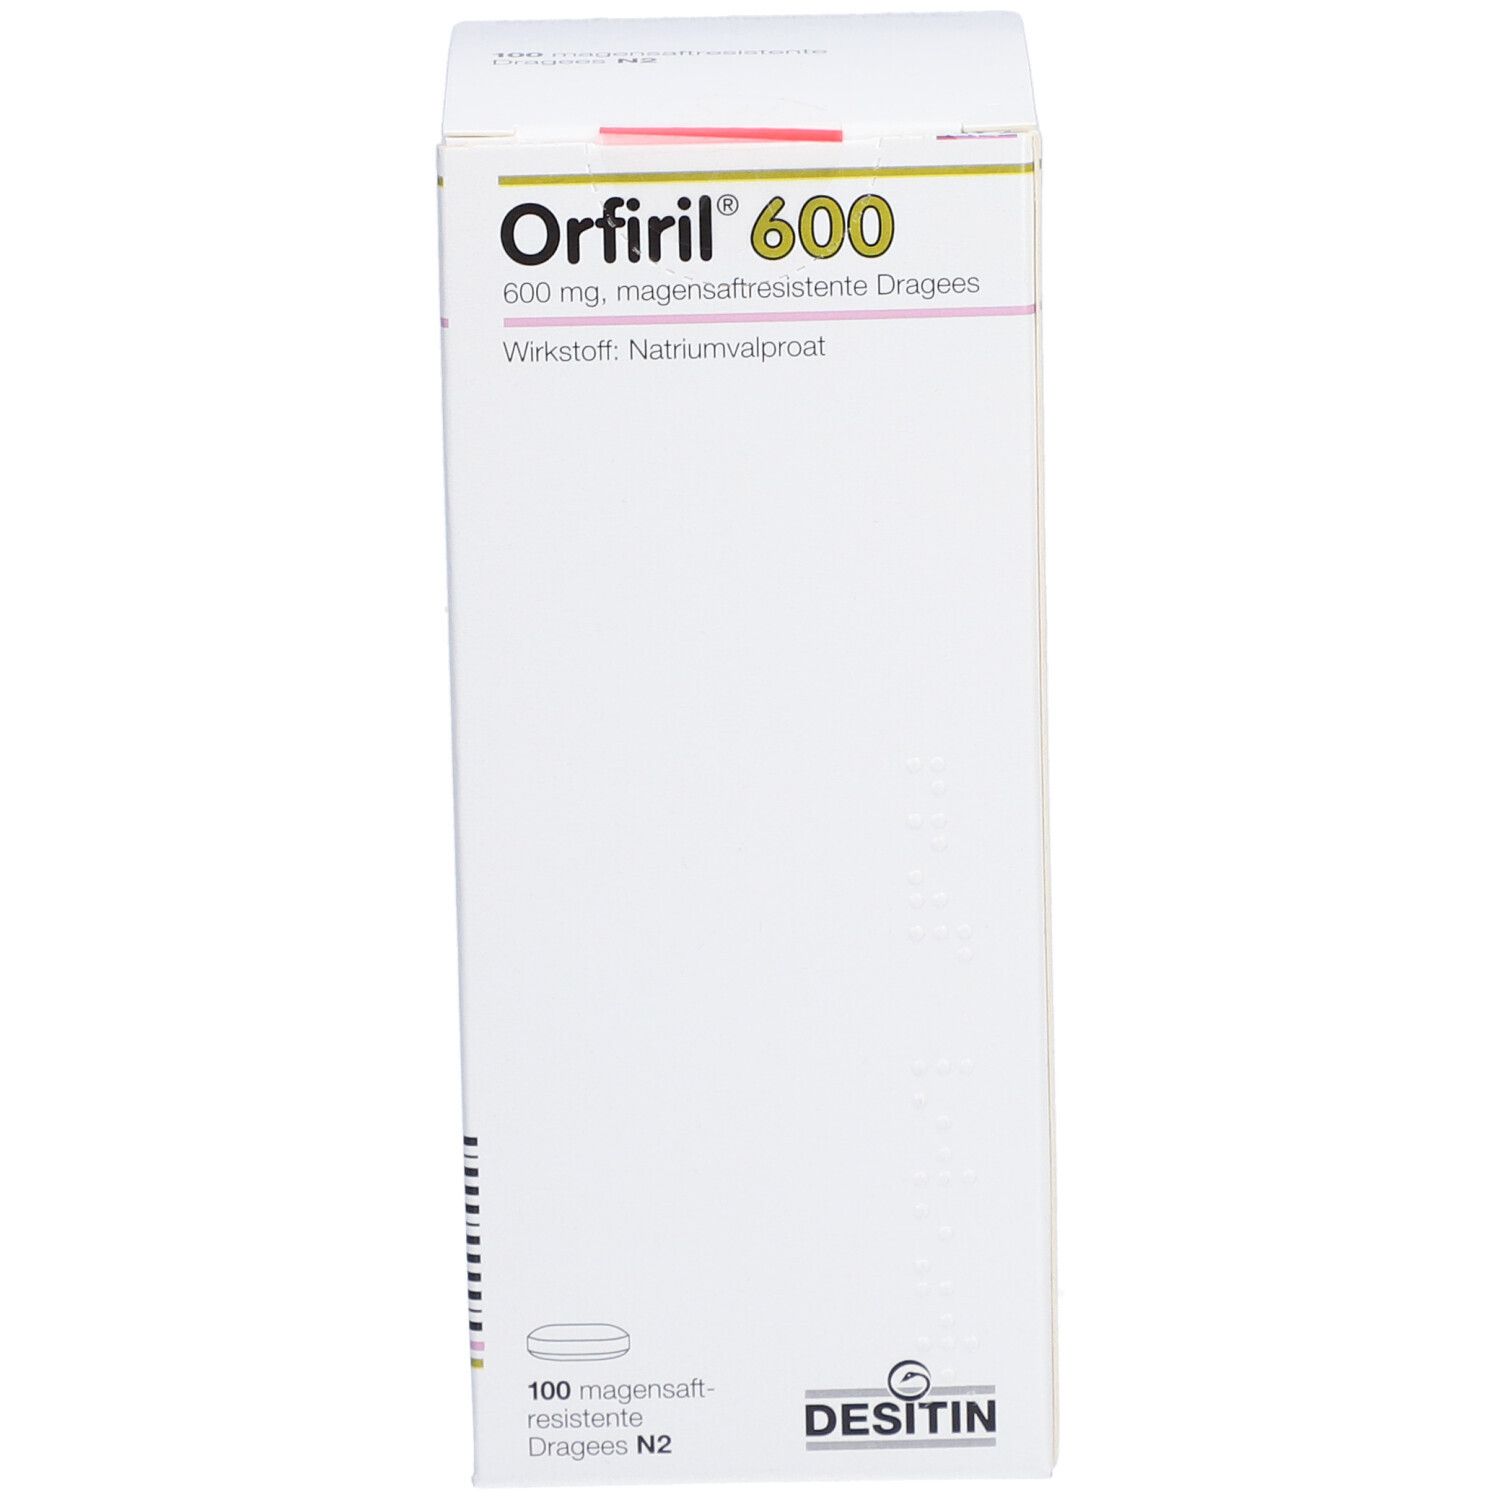 Orfiril® 600